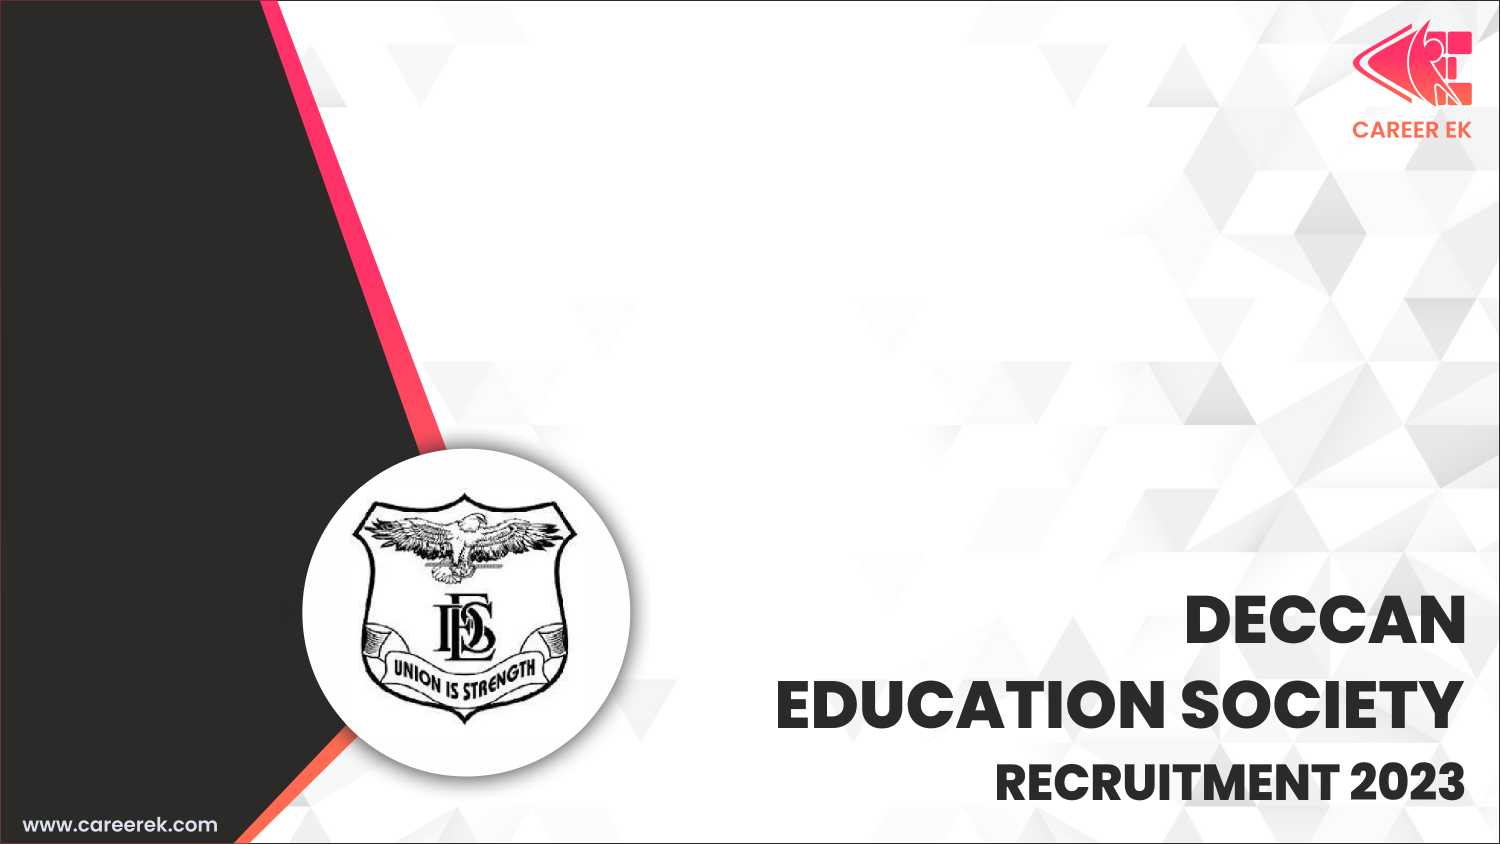 Deccan Education Society Recruitment 2023